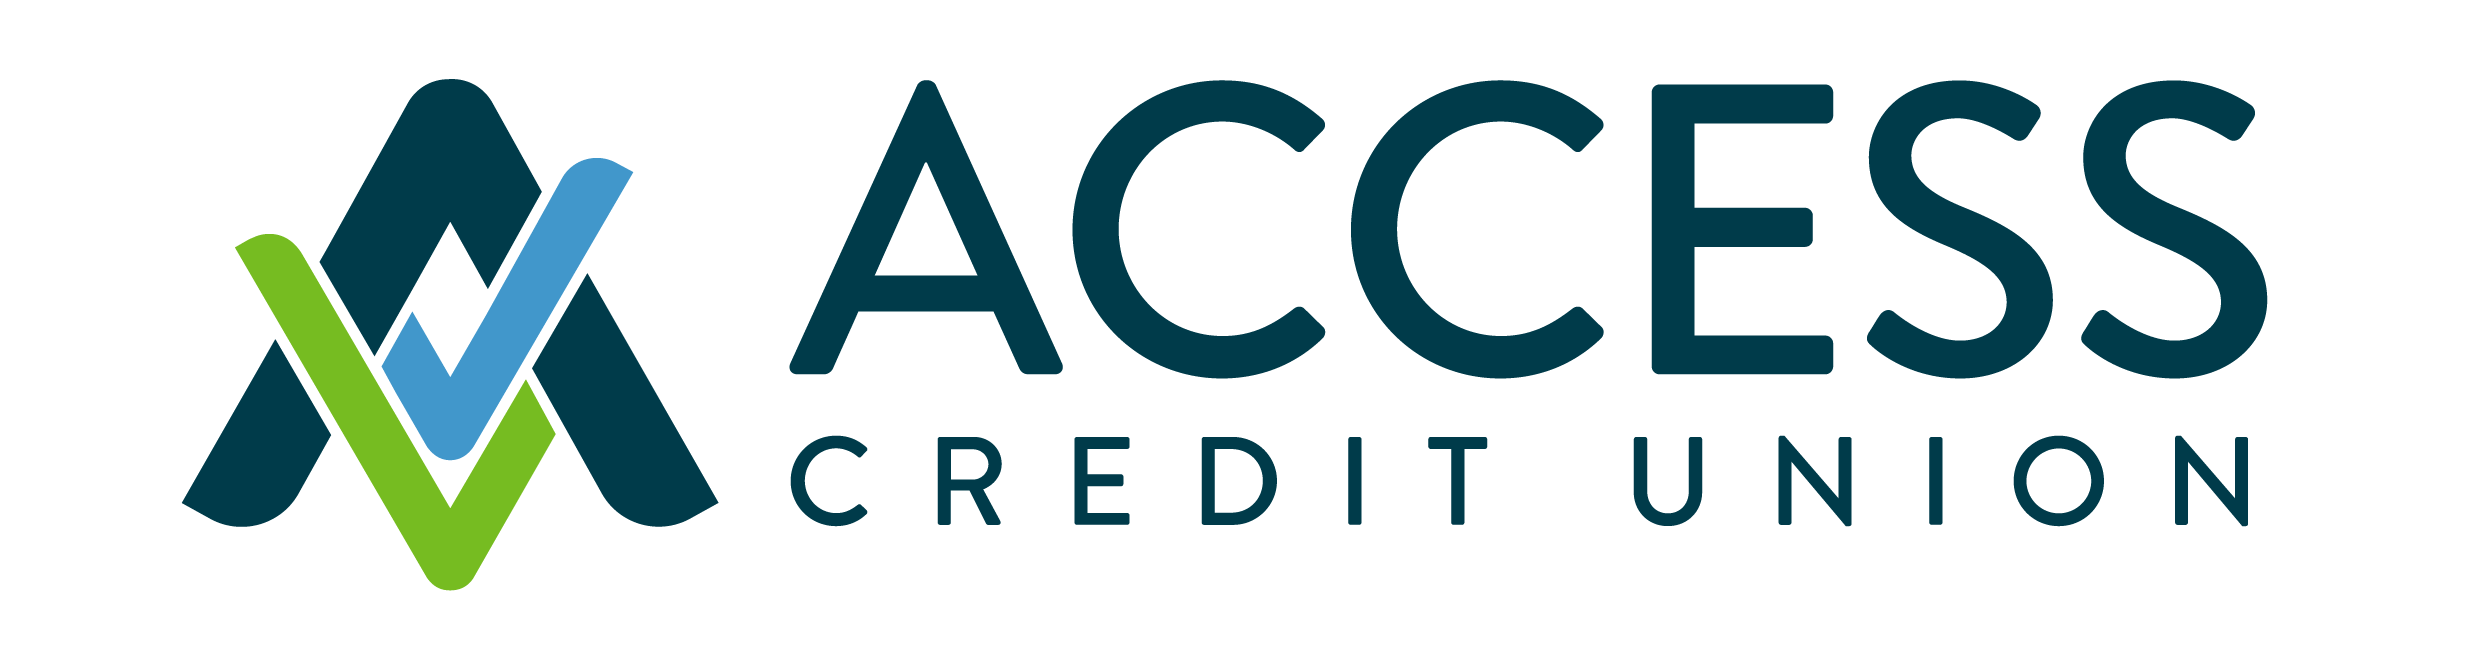 Access Credit Union